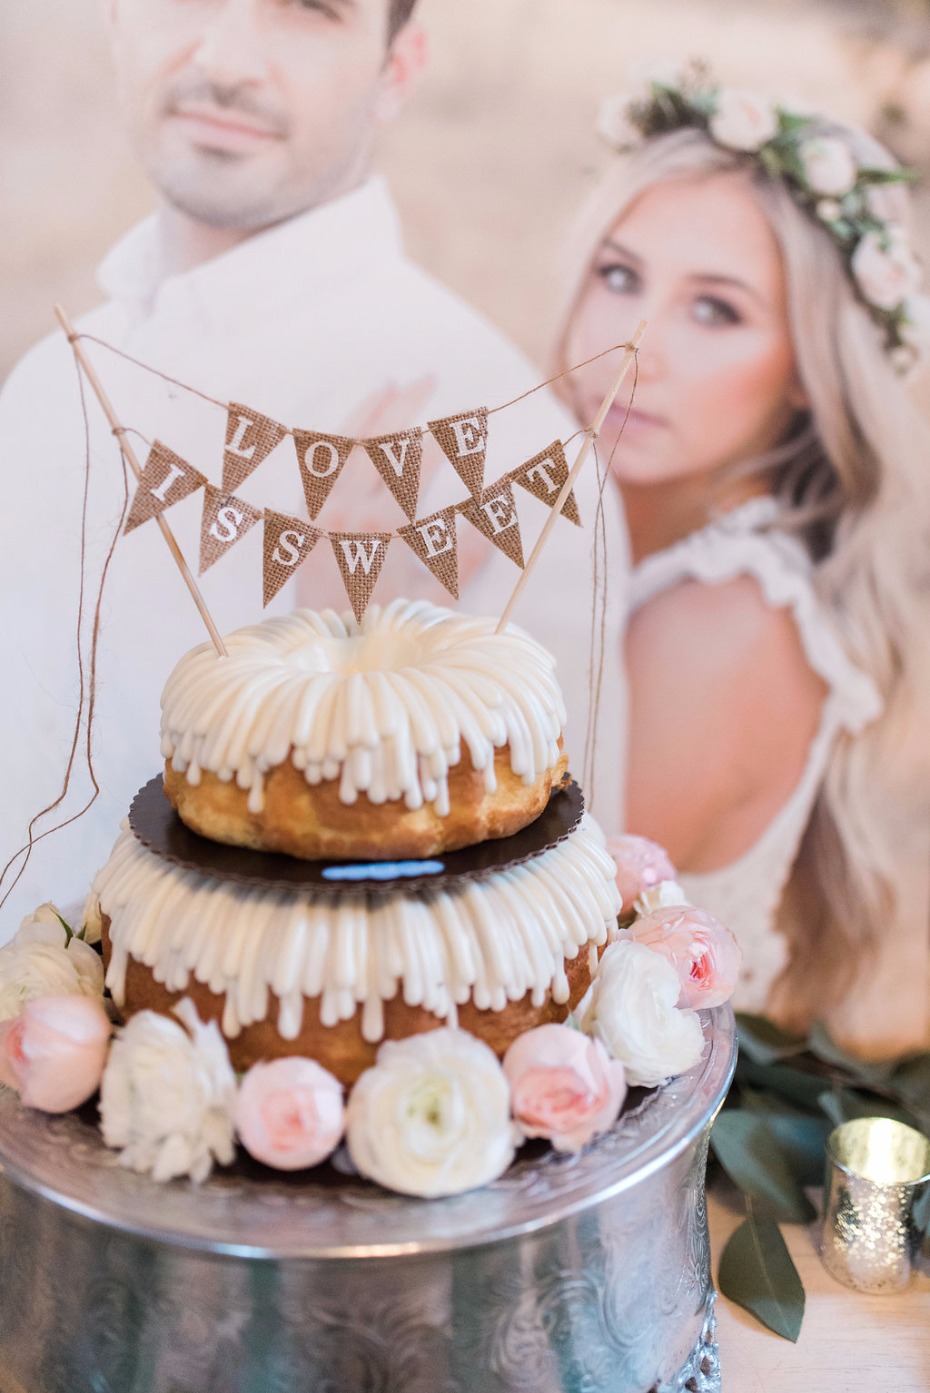 Wedding bundt cake